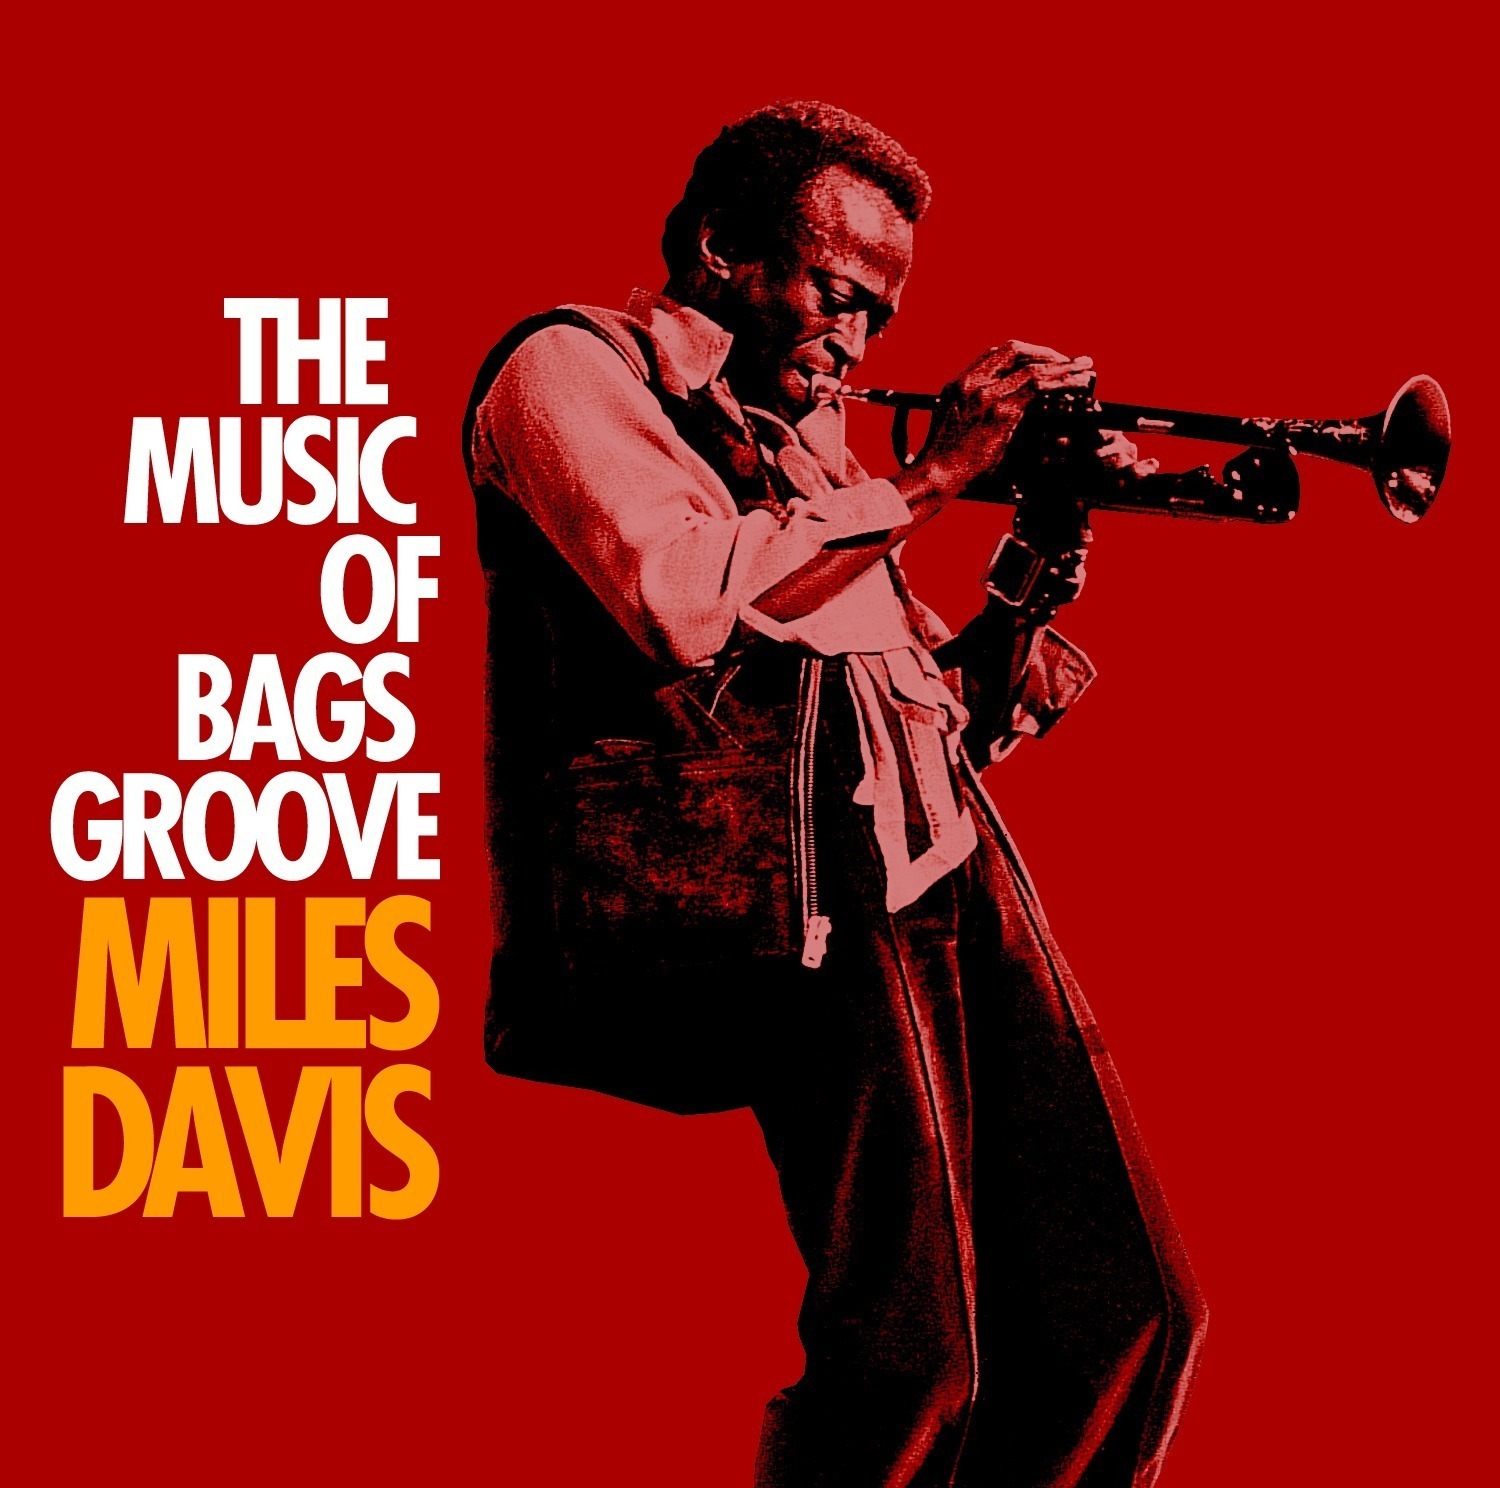 Miles DAVIS - Bags Groove Vinyl at Juno Records.